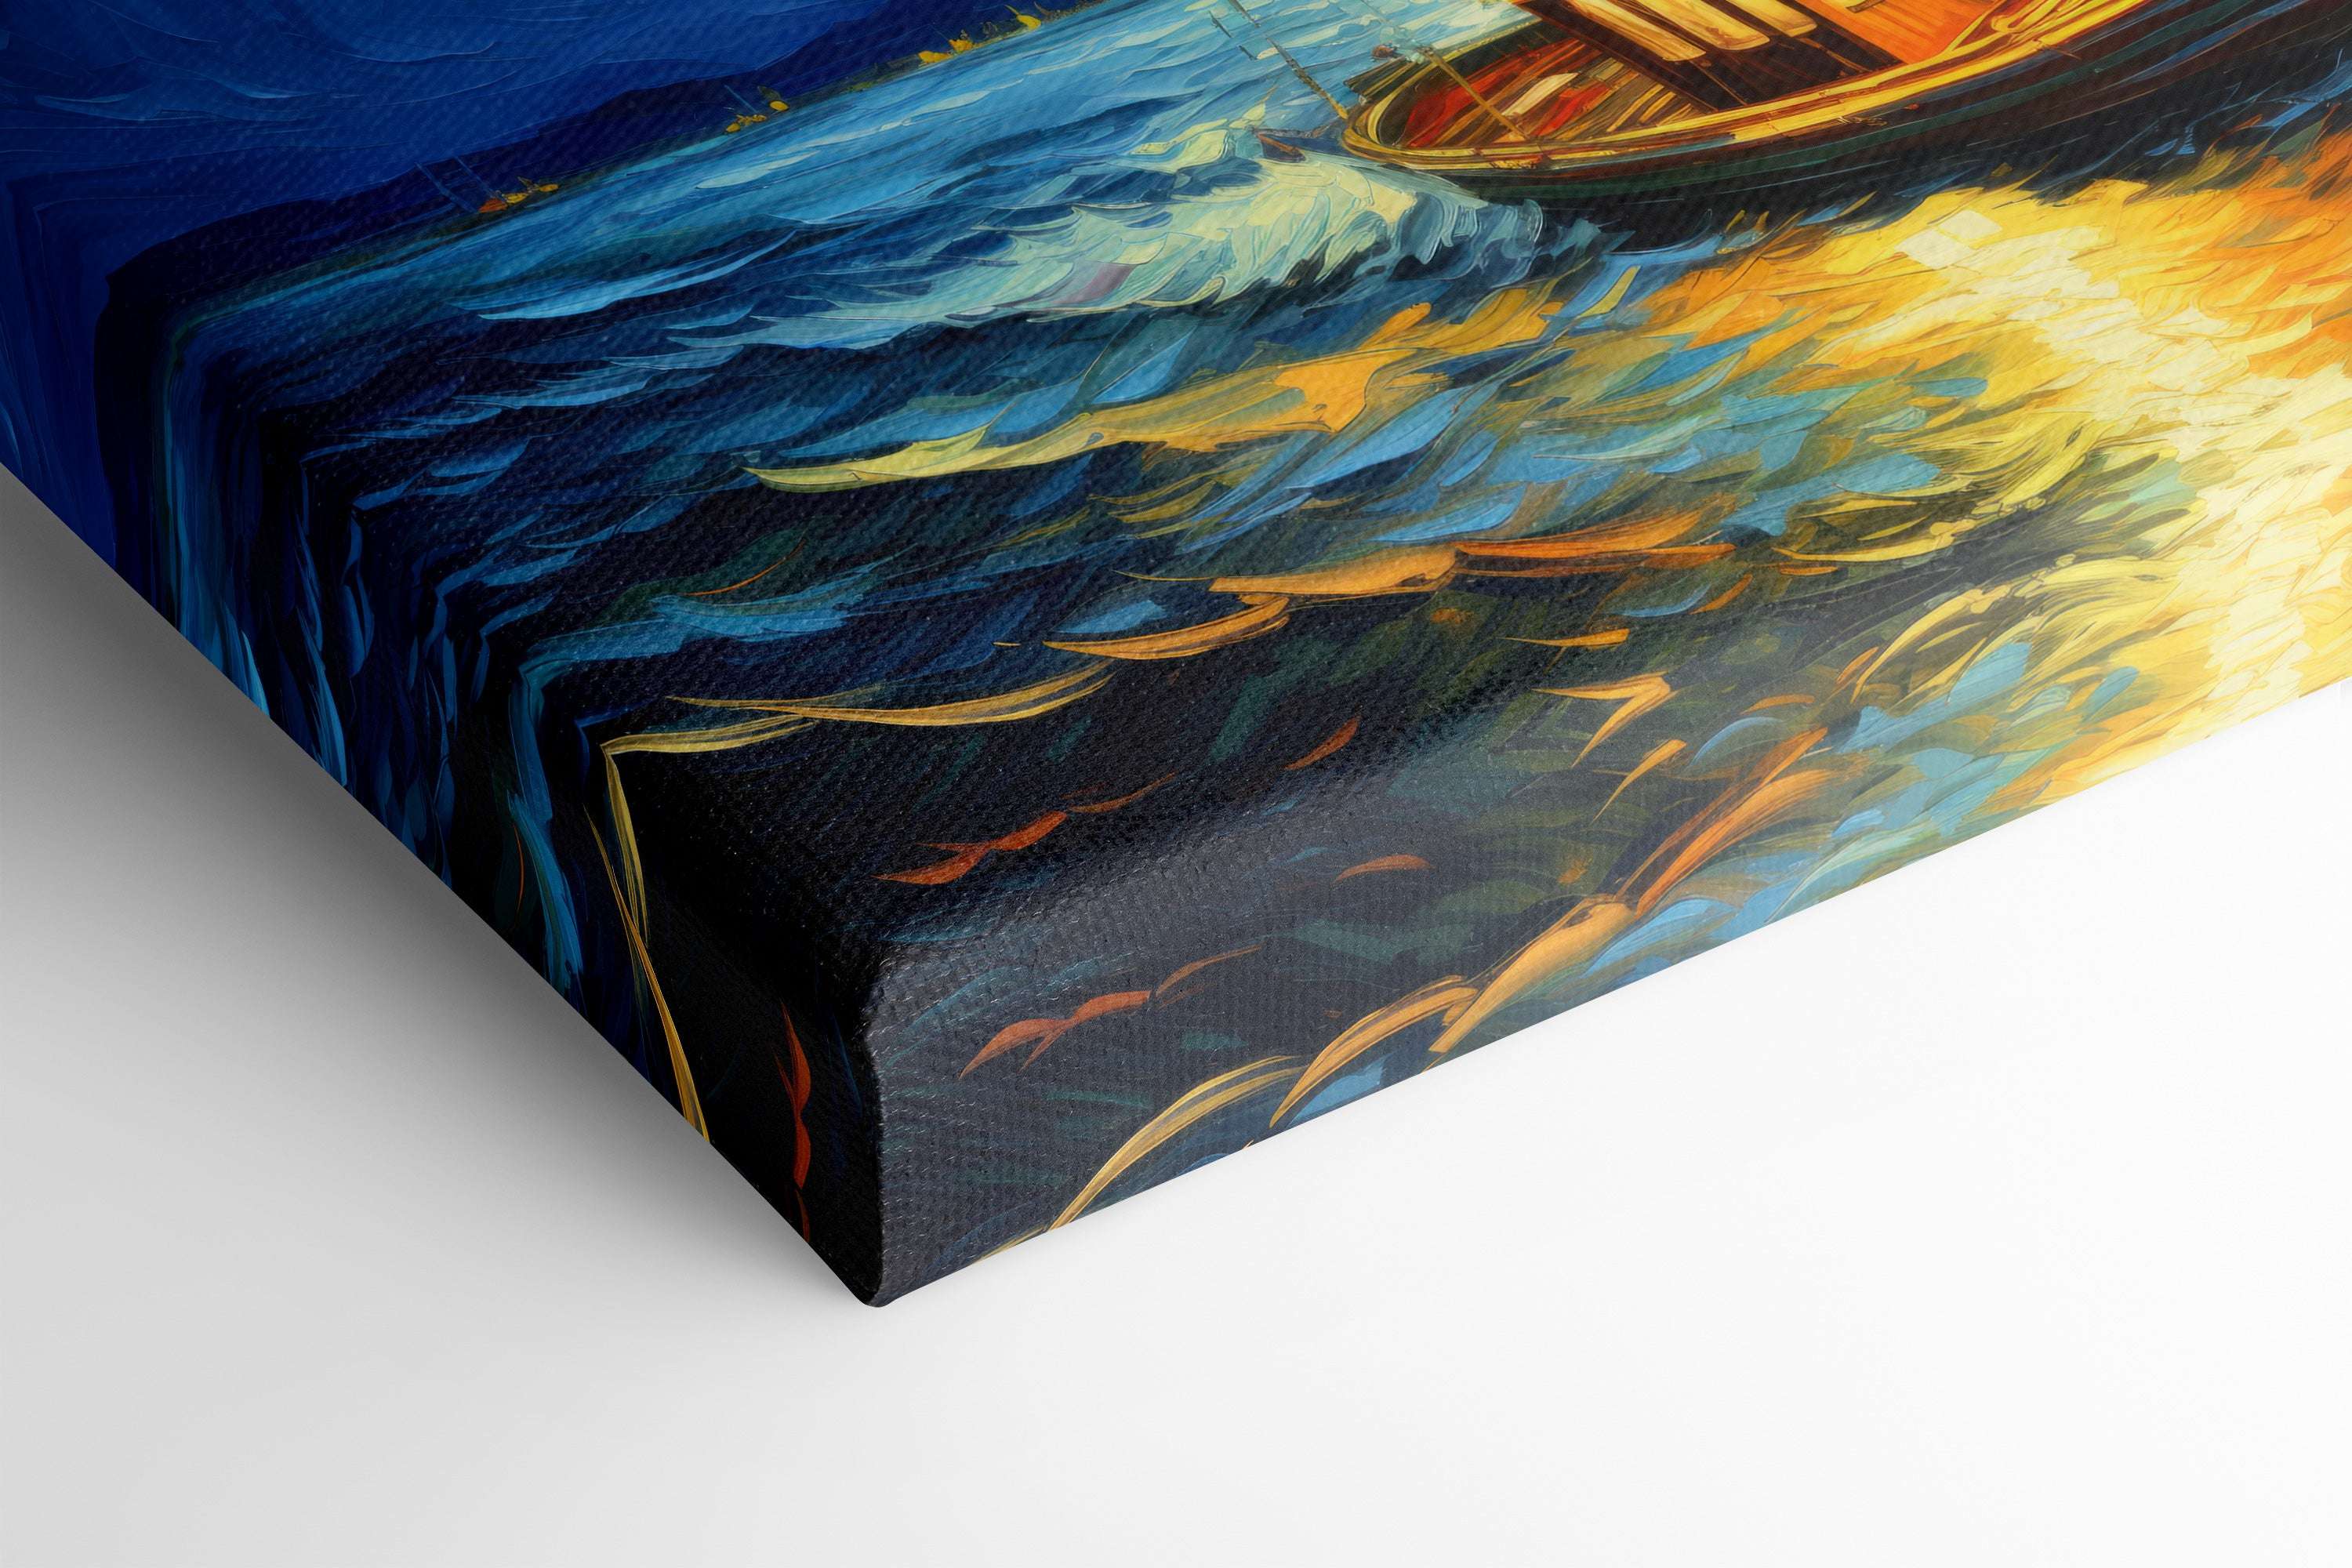 Boat Struggling Against Turbulent Blue Waves - Canvas Print - Artoholica Ready to Hang Canvas Print